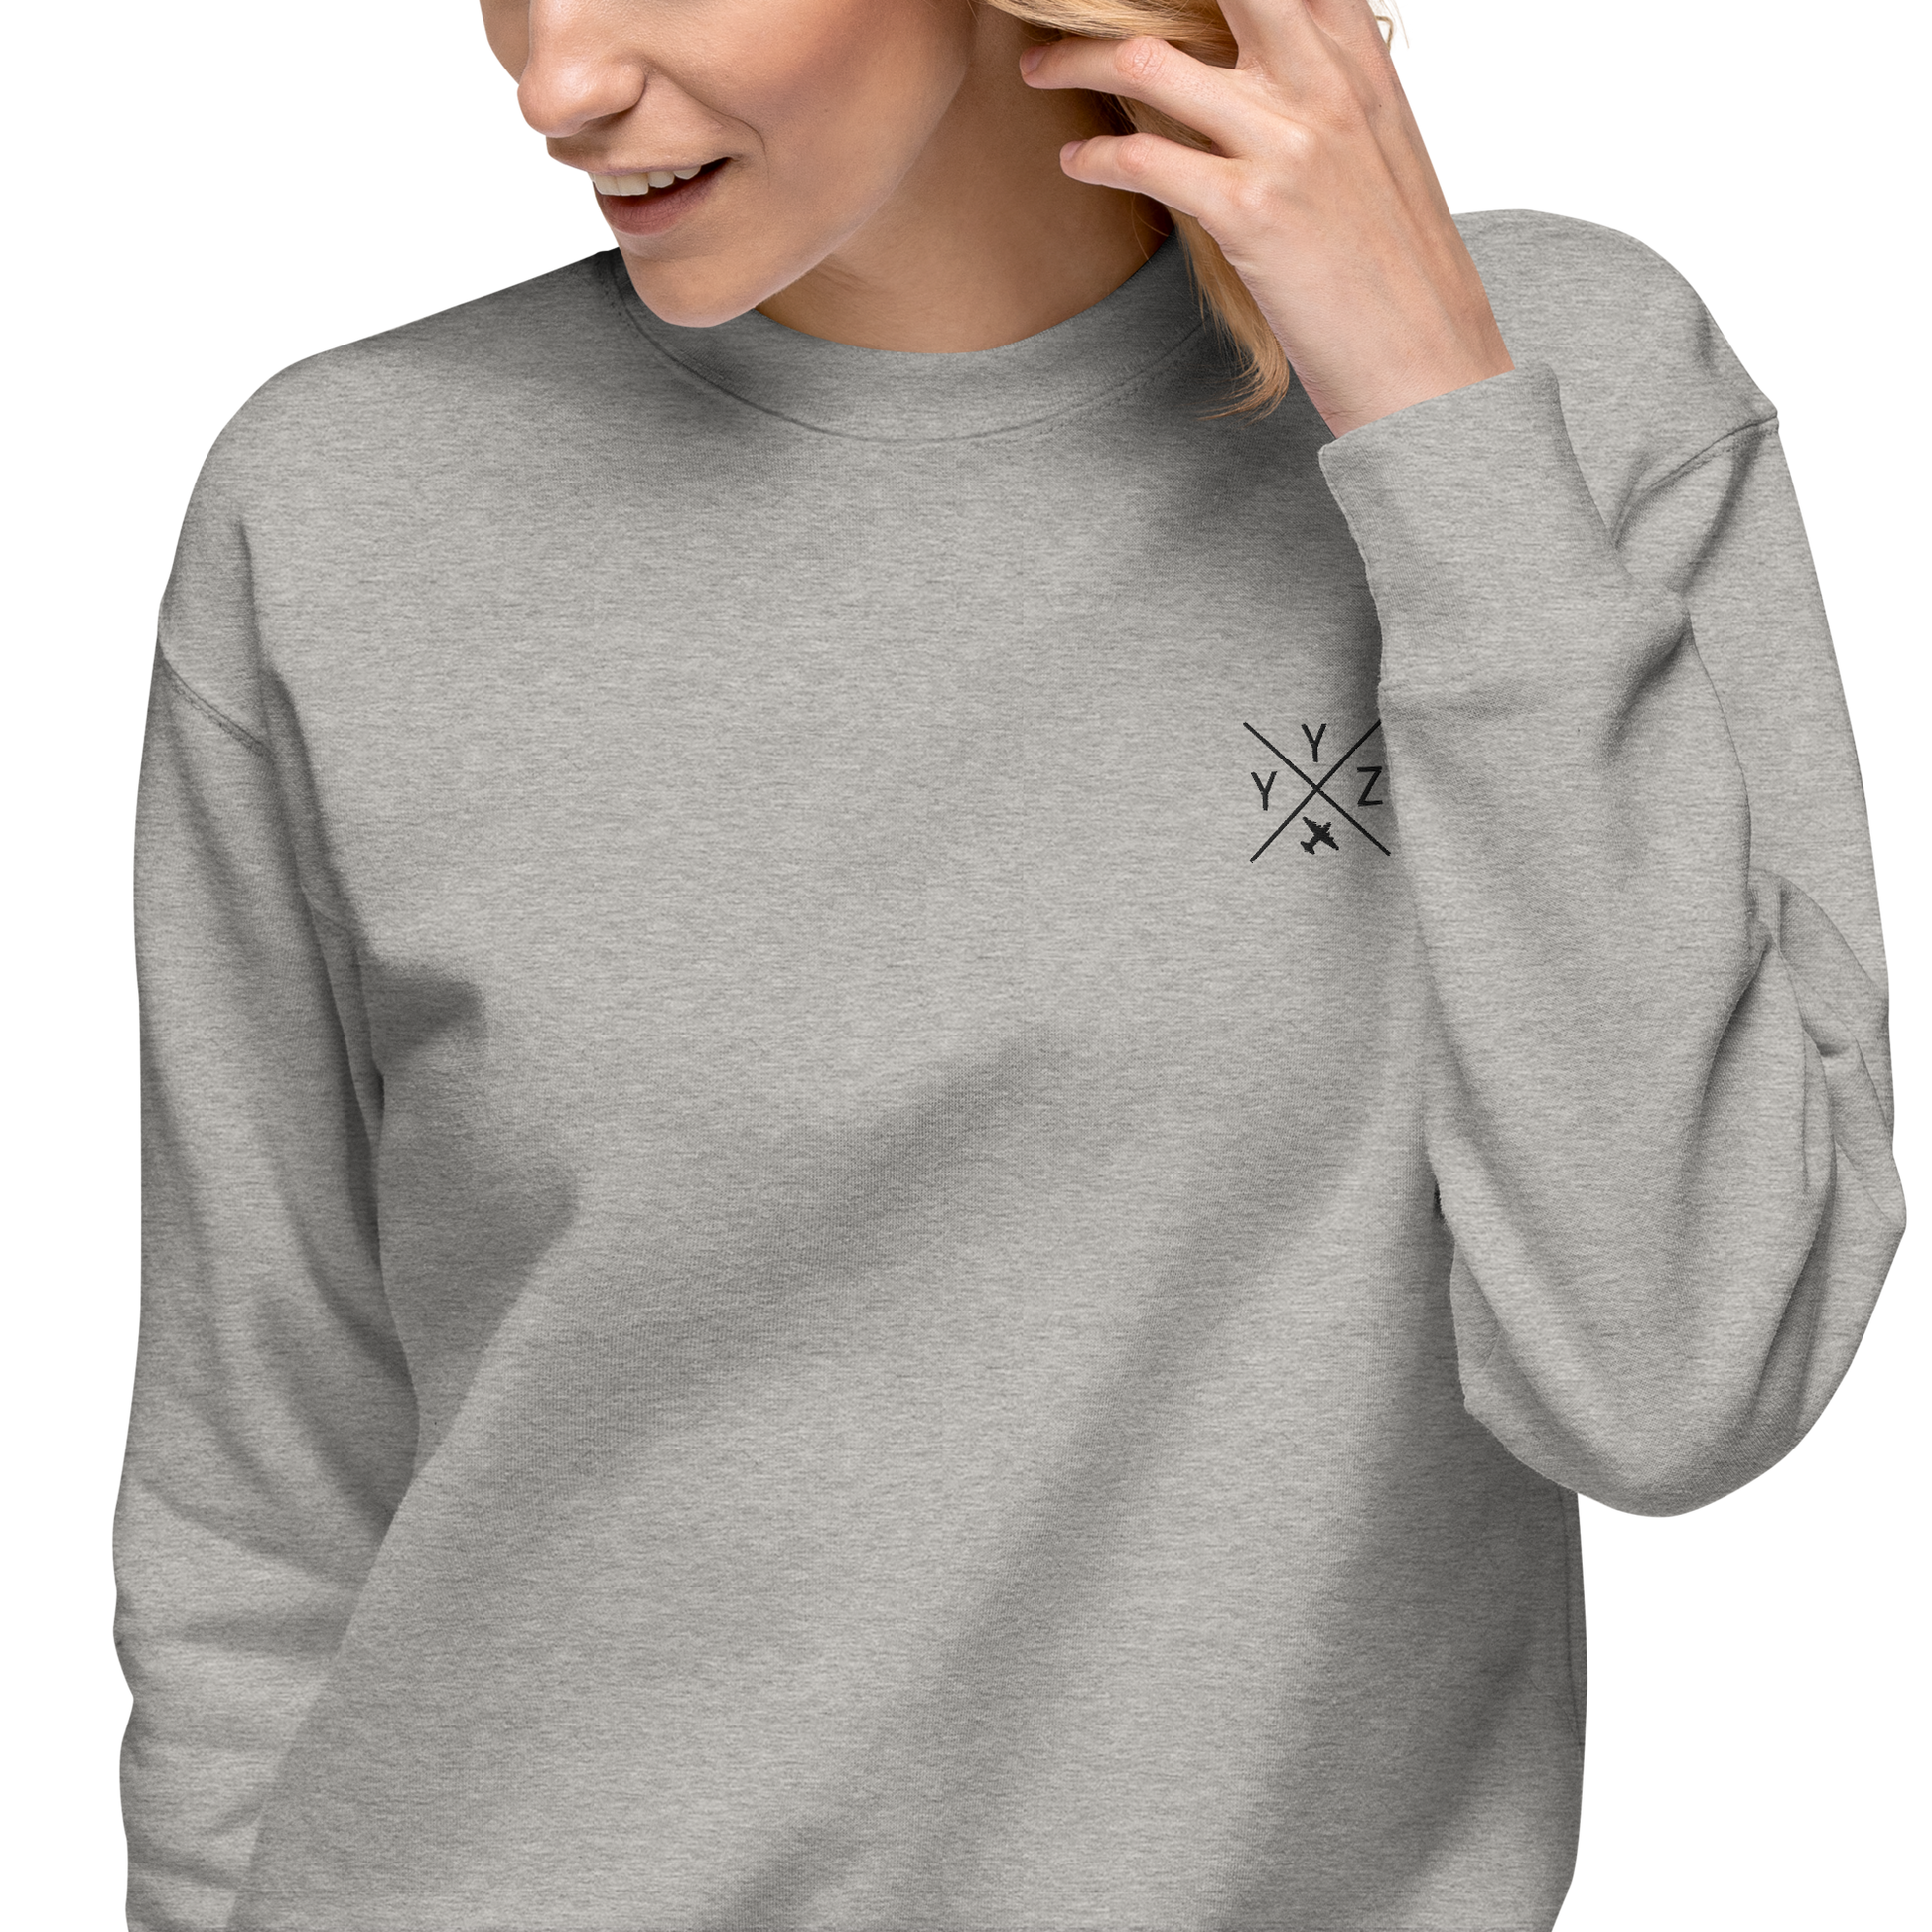 YHM Designs - YYZ Toronto Premium Sweatshirt - Crossed-X Design with Airport Code and Vintage Propliner - Black Embroidery - Image 03